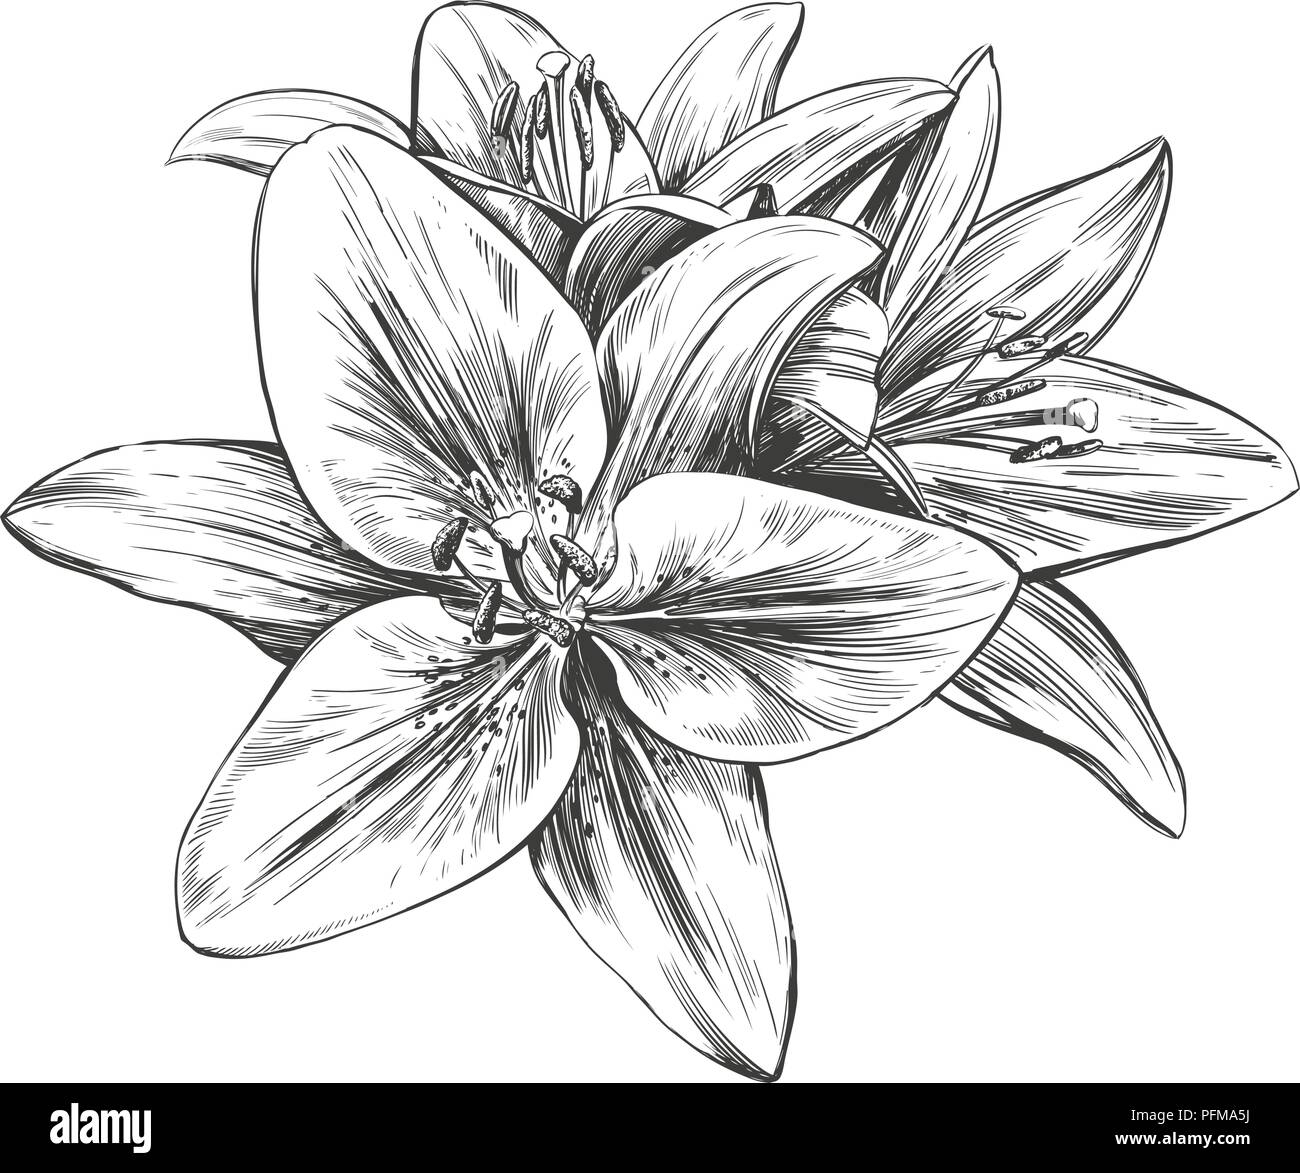 Semi-Realistic Lily |Art| | Fandom